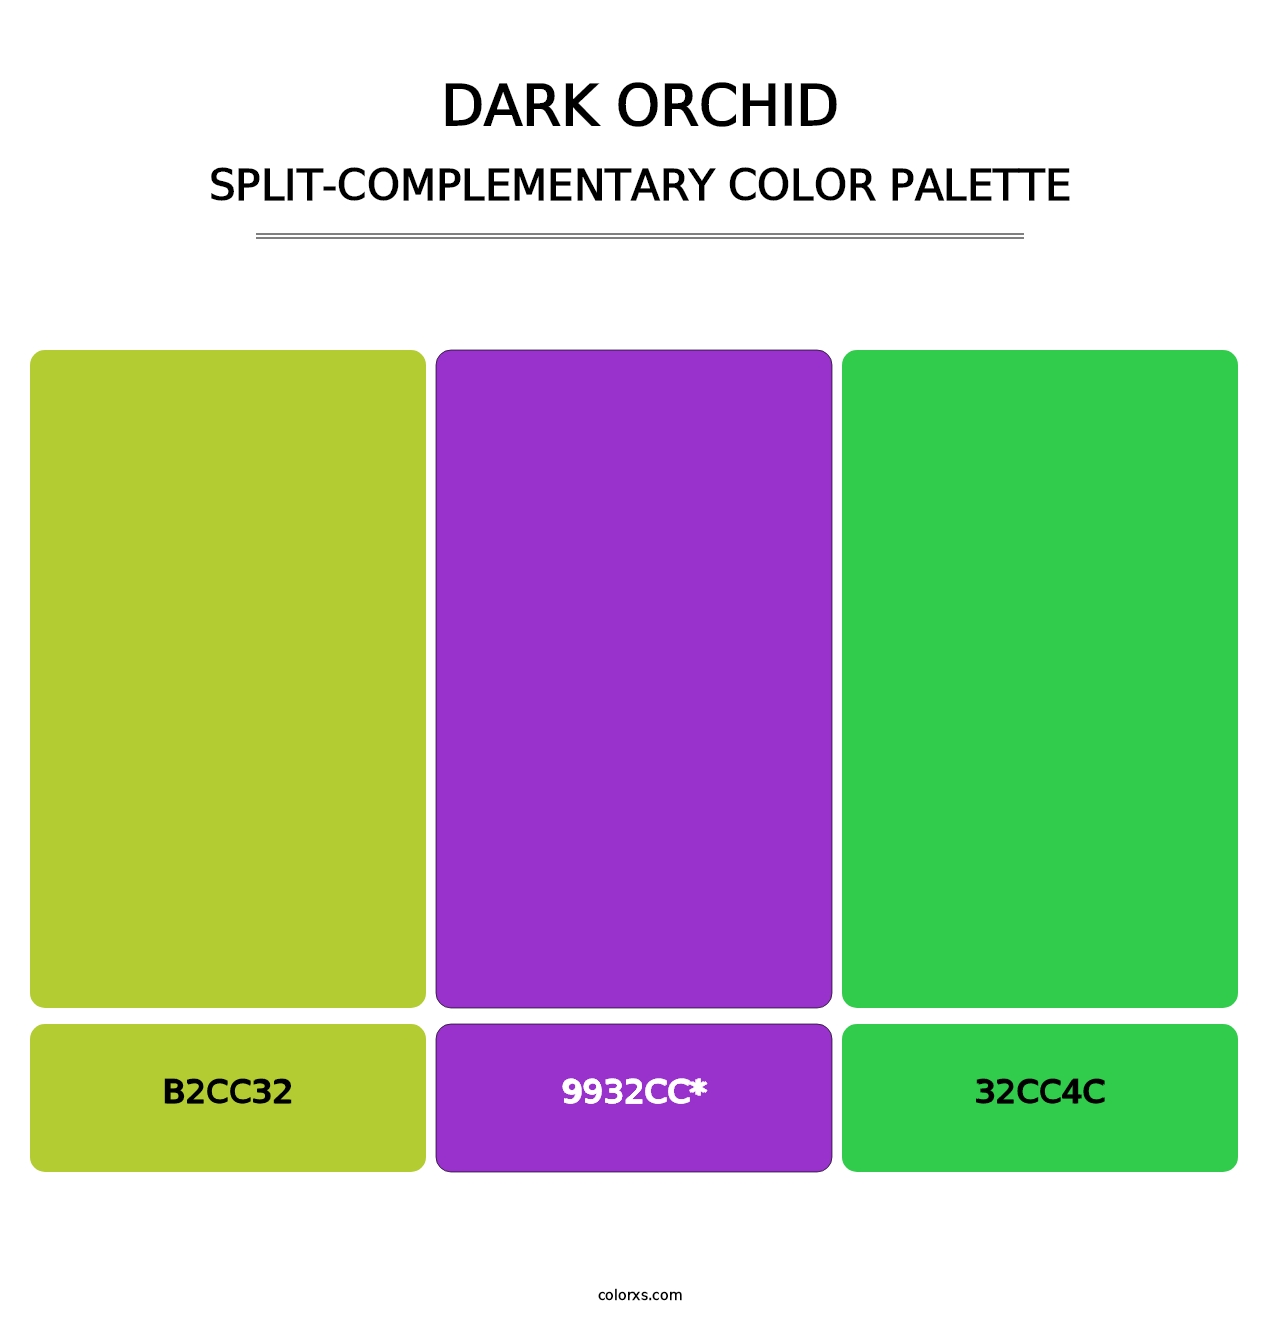 Dark Orchid - Split-Complementary Color Palette